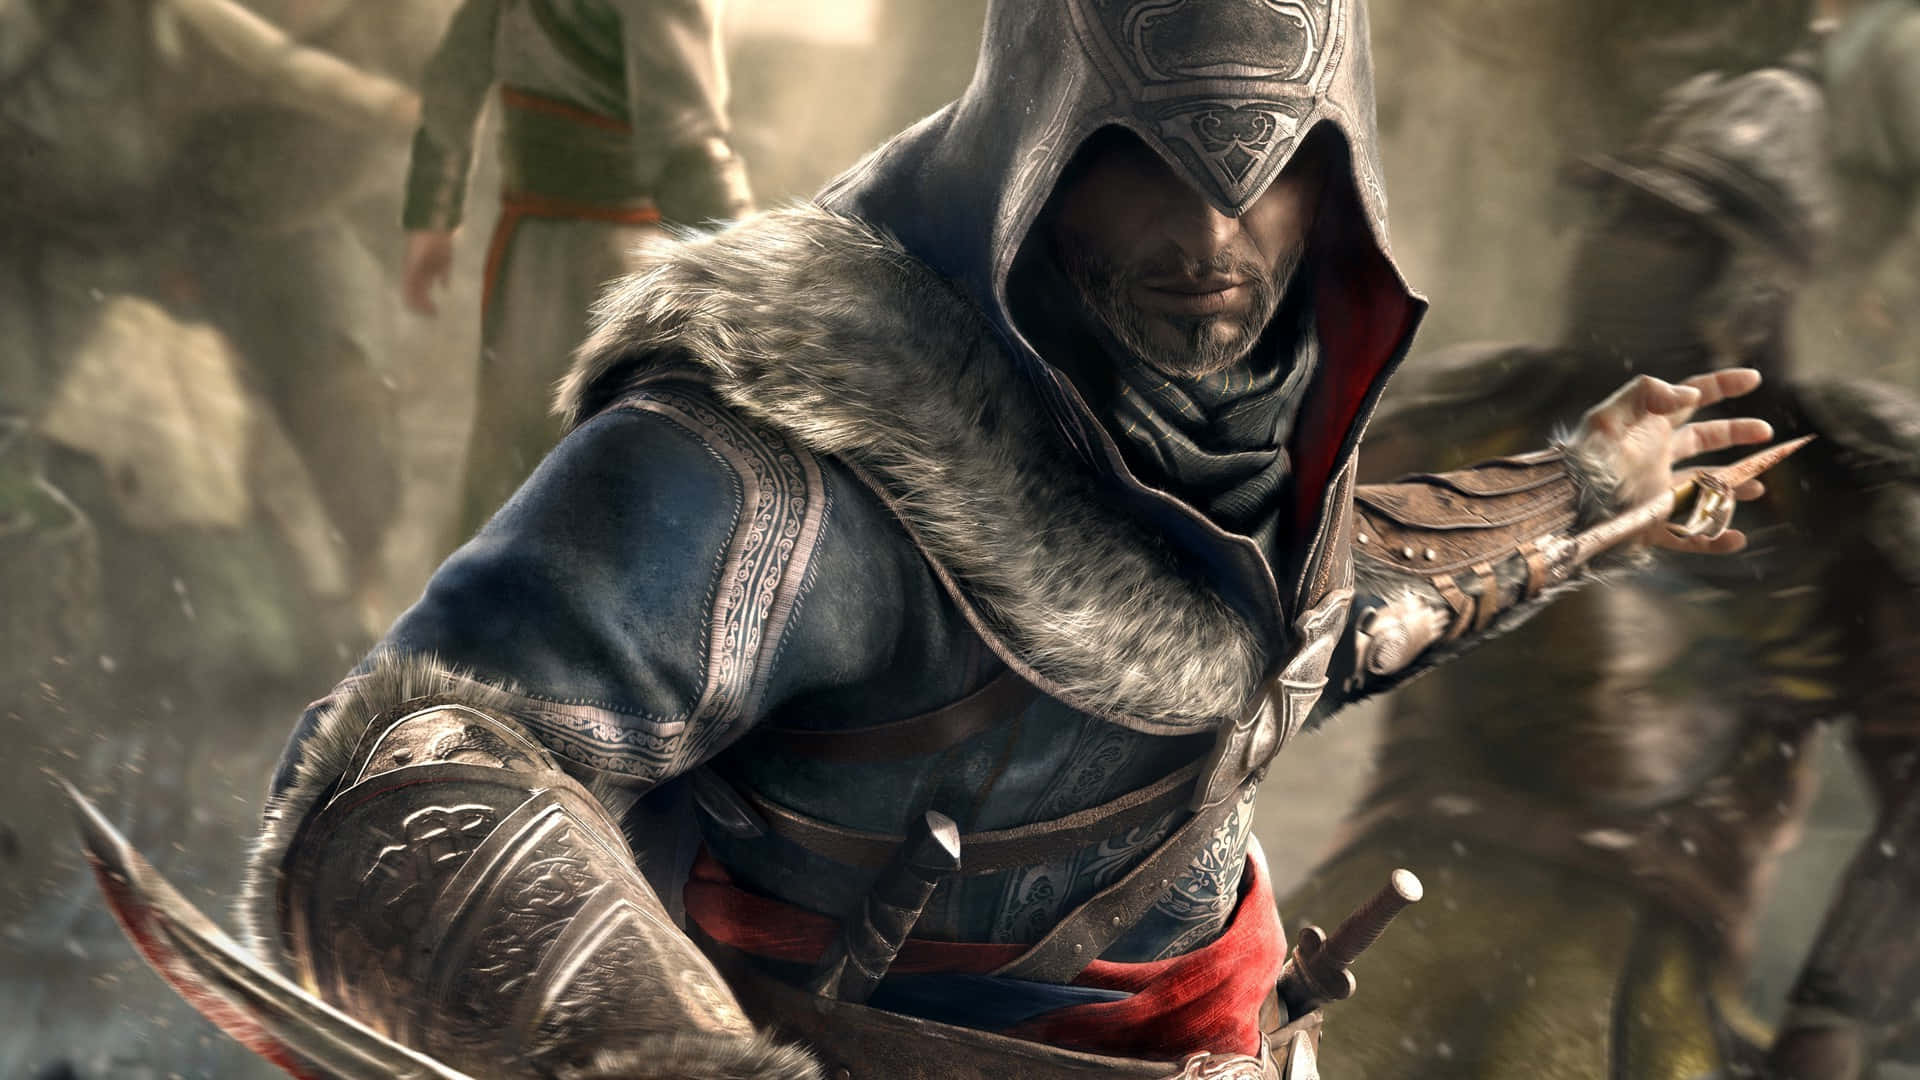 Ezio Auditore - Master Assassin in Action Wallpaper